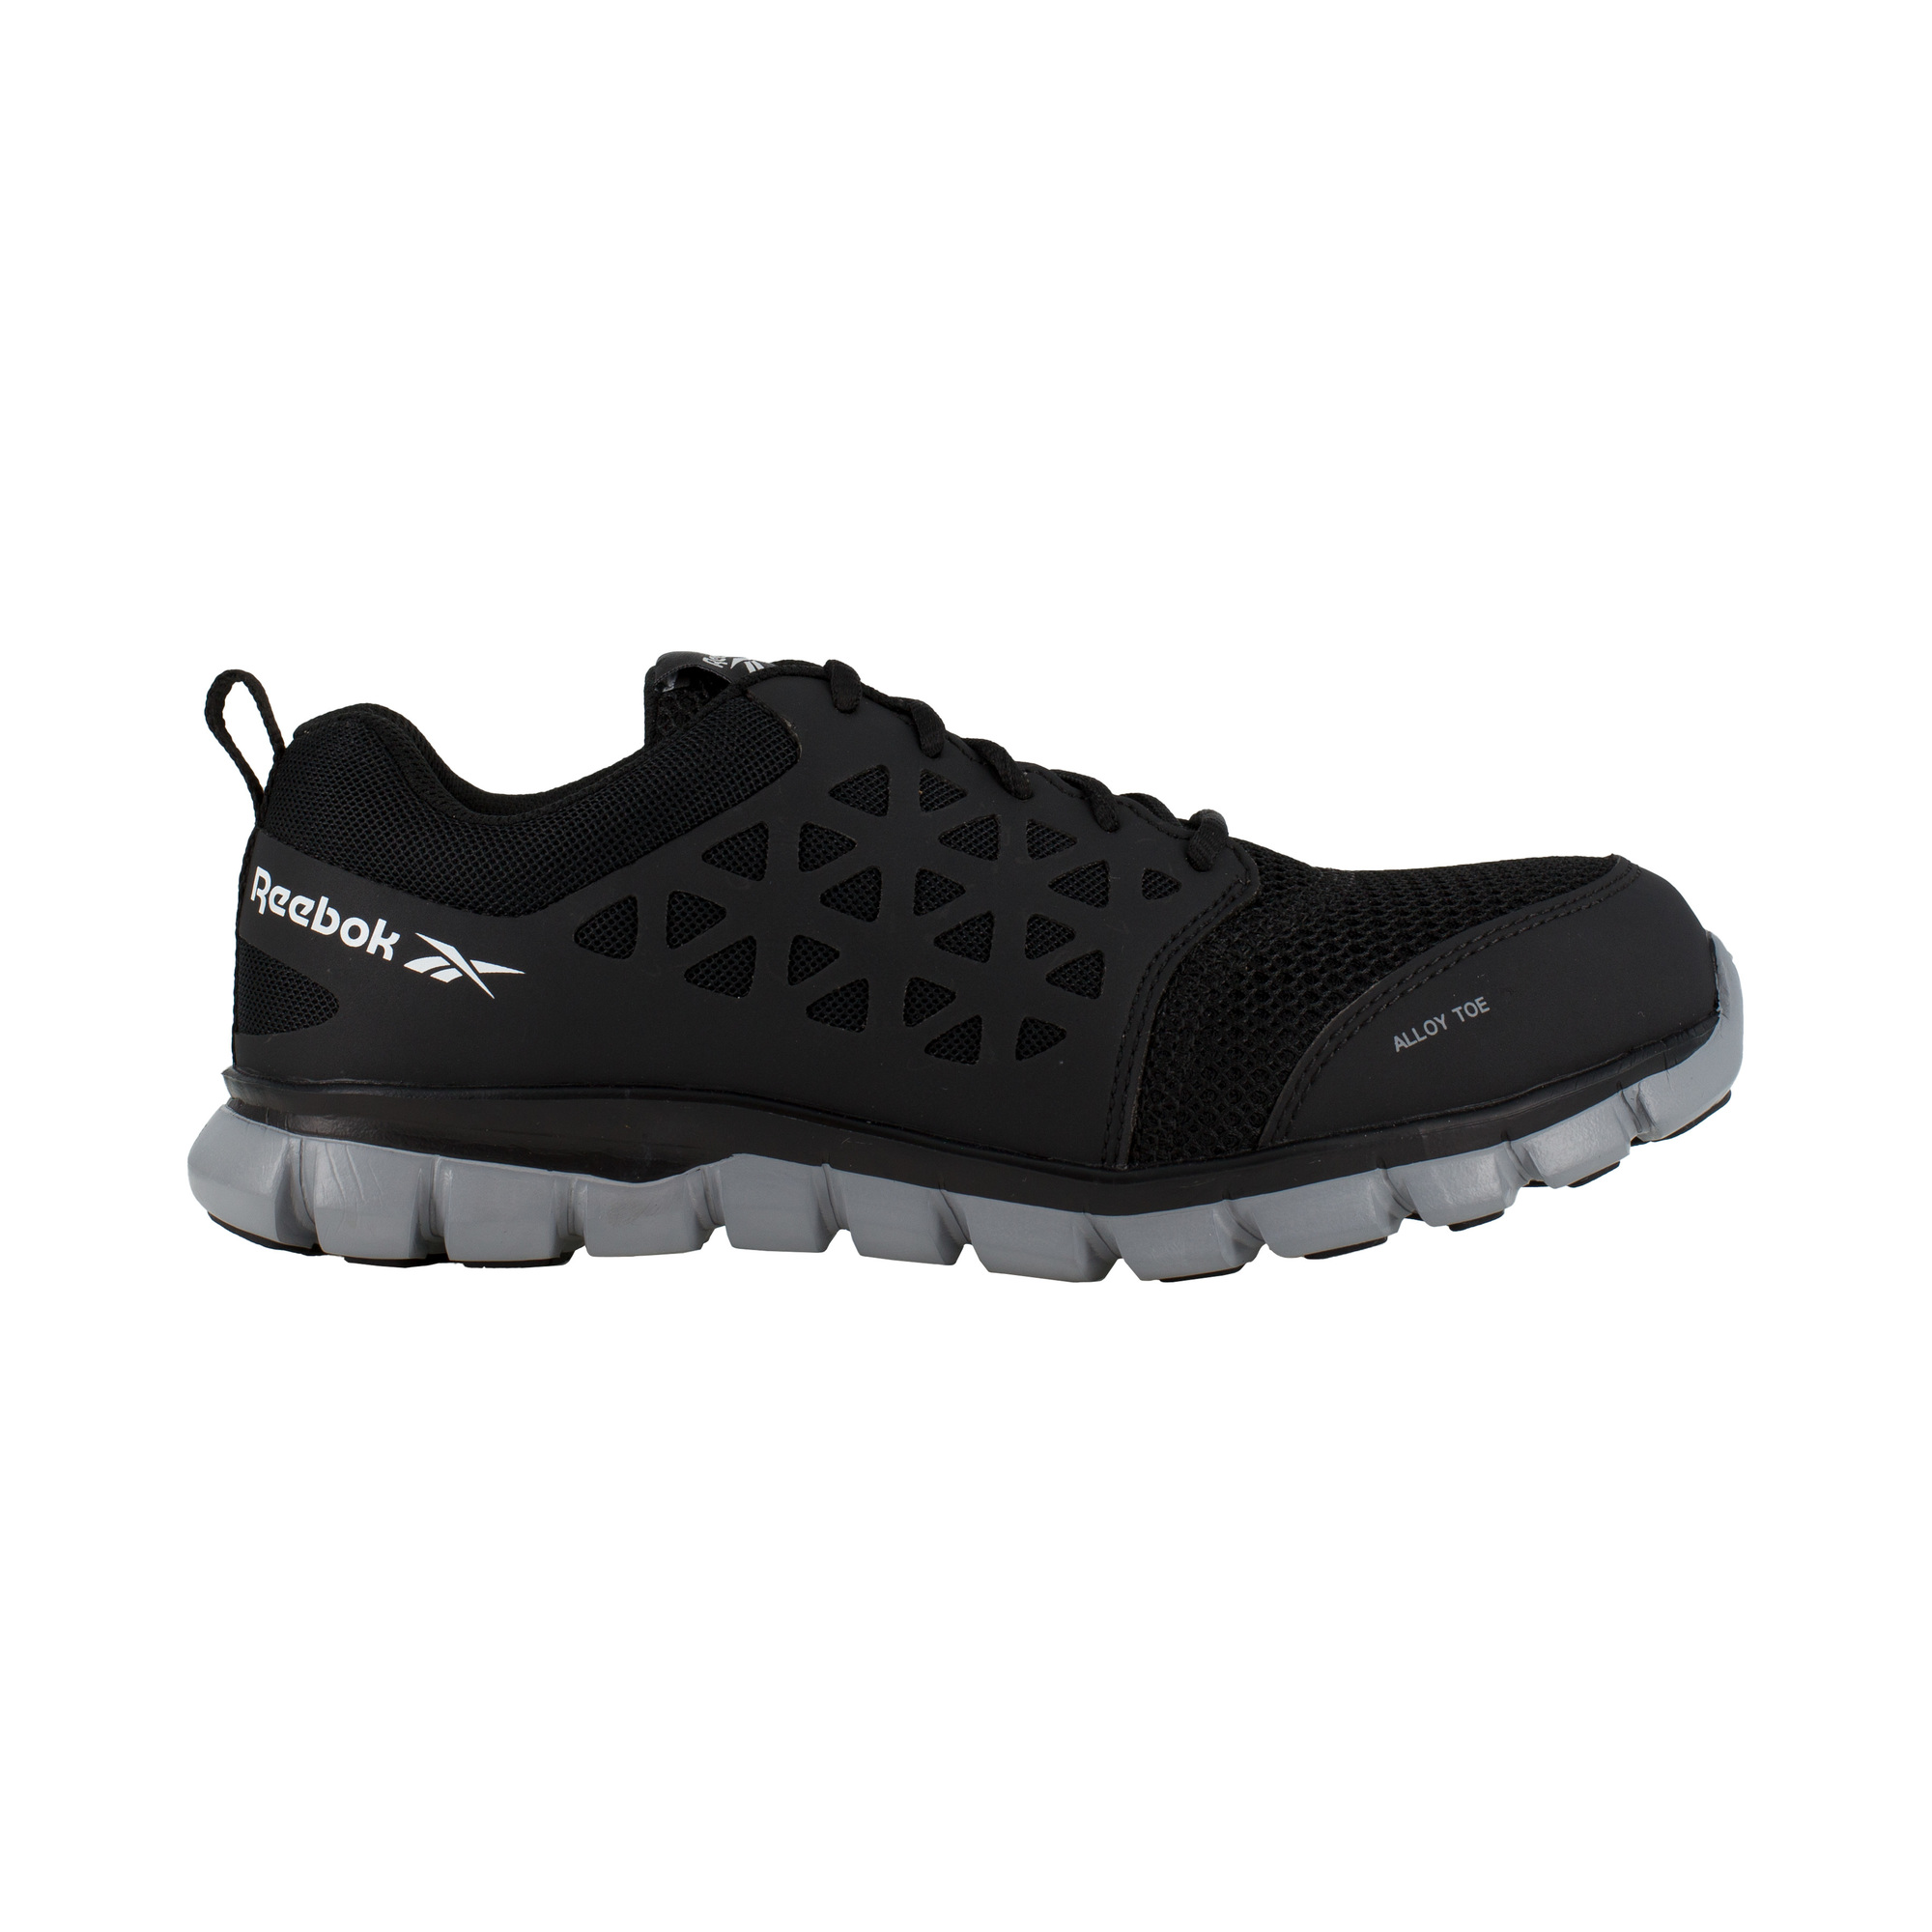 Reebok, Athletic Work Shoe, Size 5 1/2, Width Medium, Color Black, Model RB041